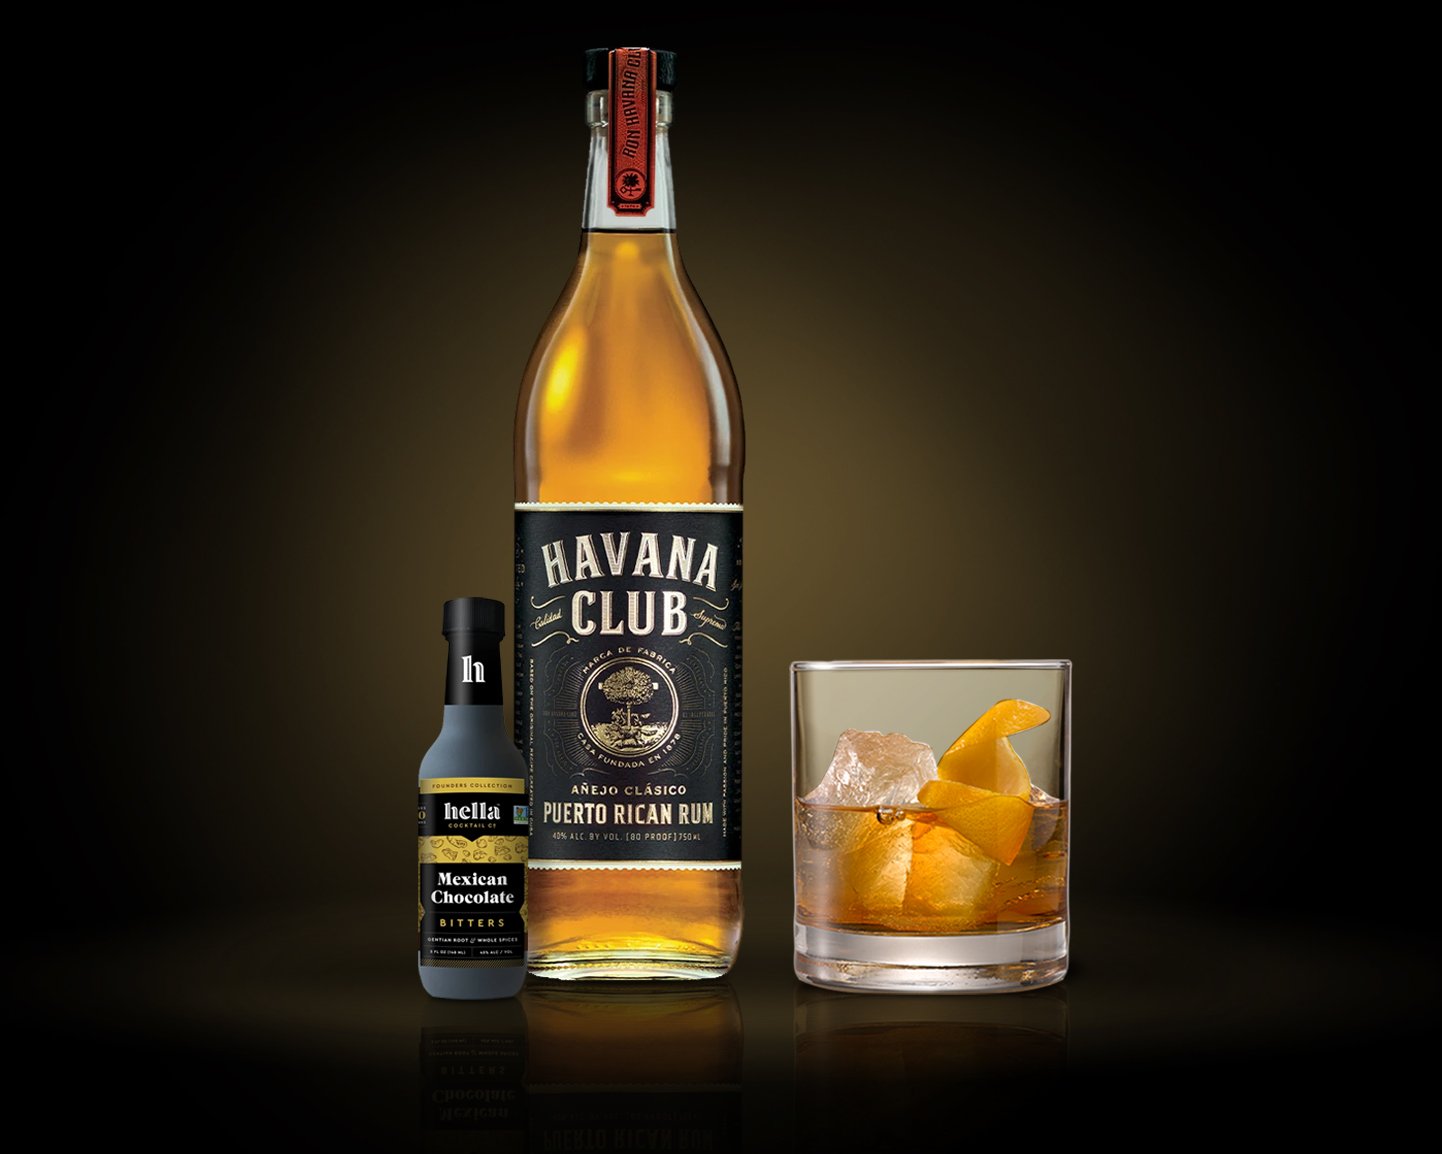 Havana Club Hella Rum Old Fashioned Cocktail Recipe | ReserveBar